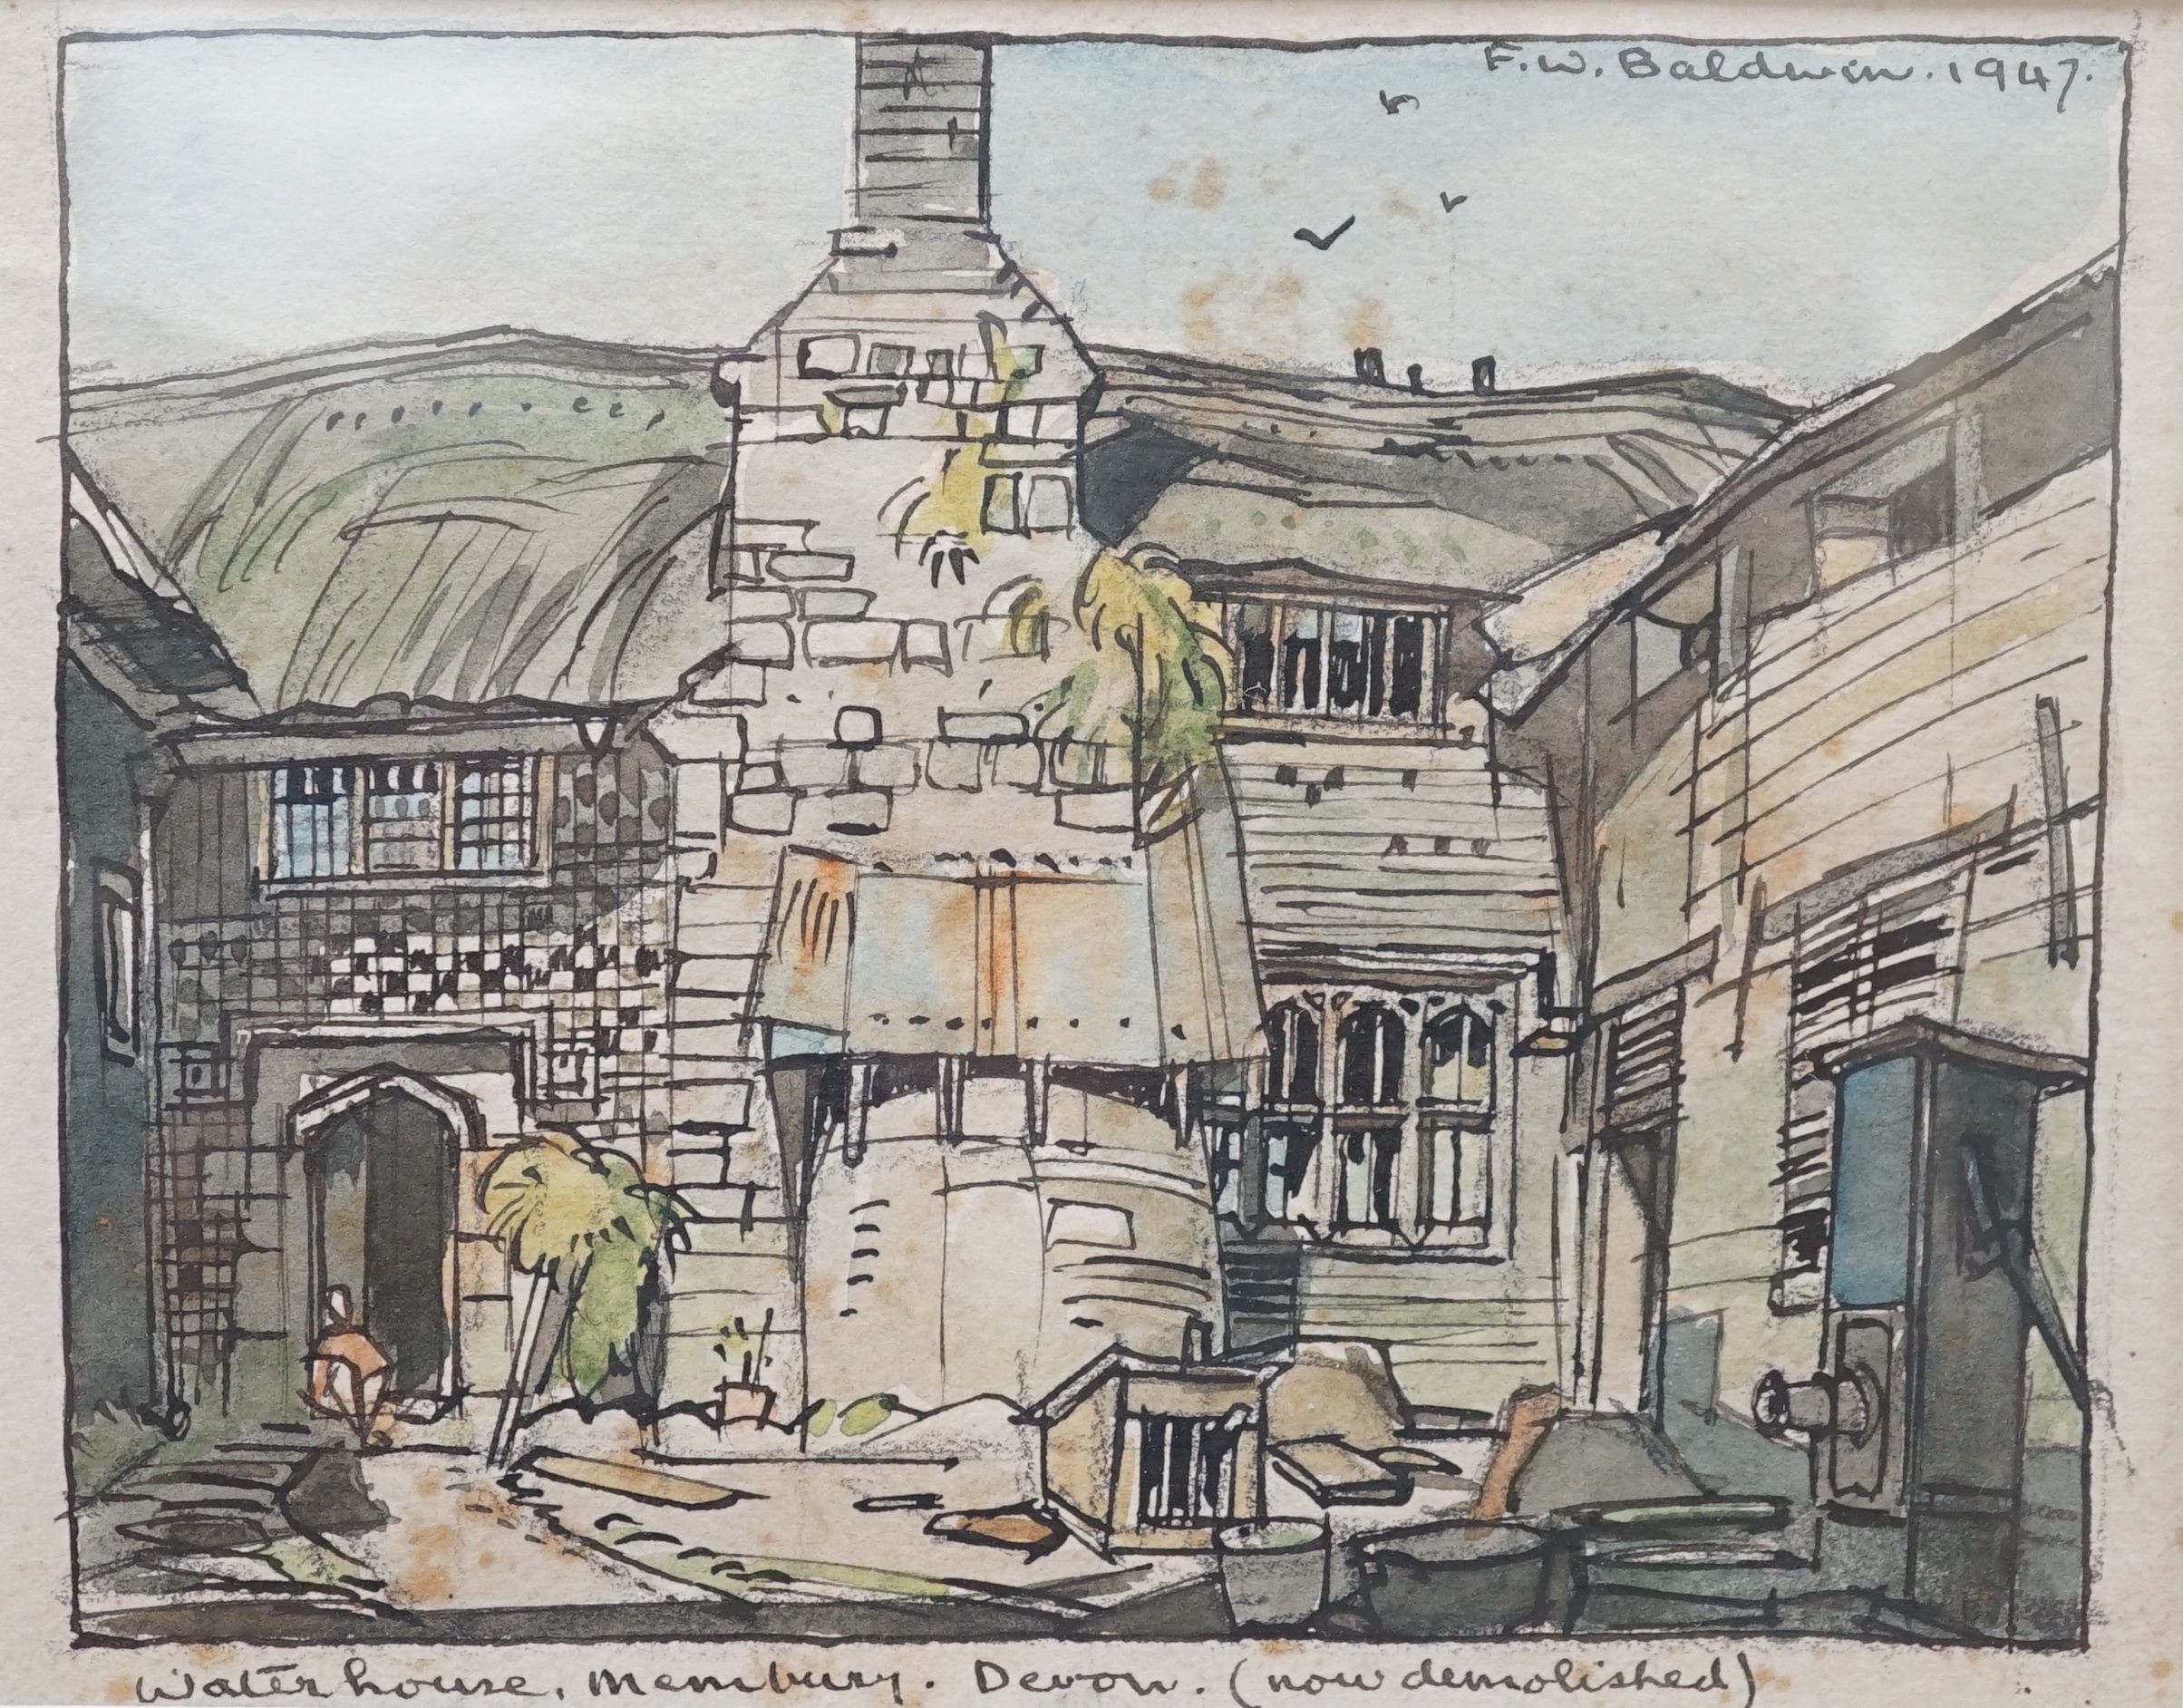 Frederick William Baldwin (b.1899), Waterhouse, Membury, Devon, pen and watercolour, signed and dated 1947, 11 x 14cm